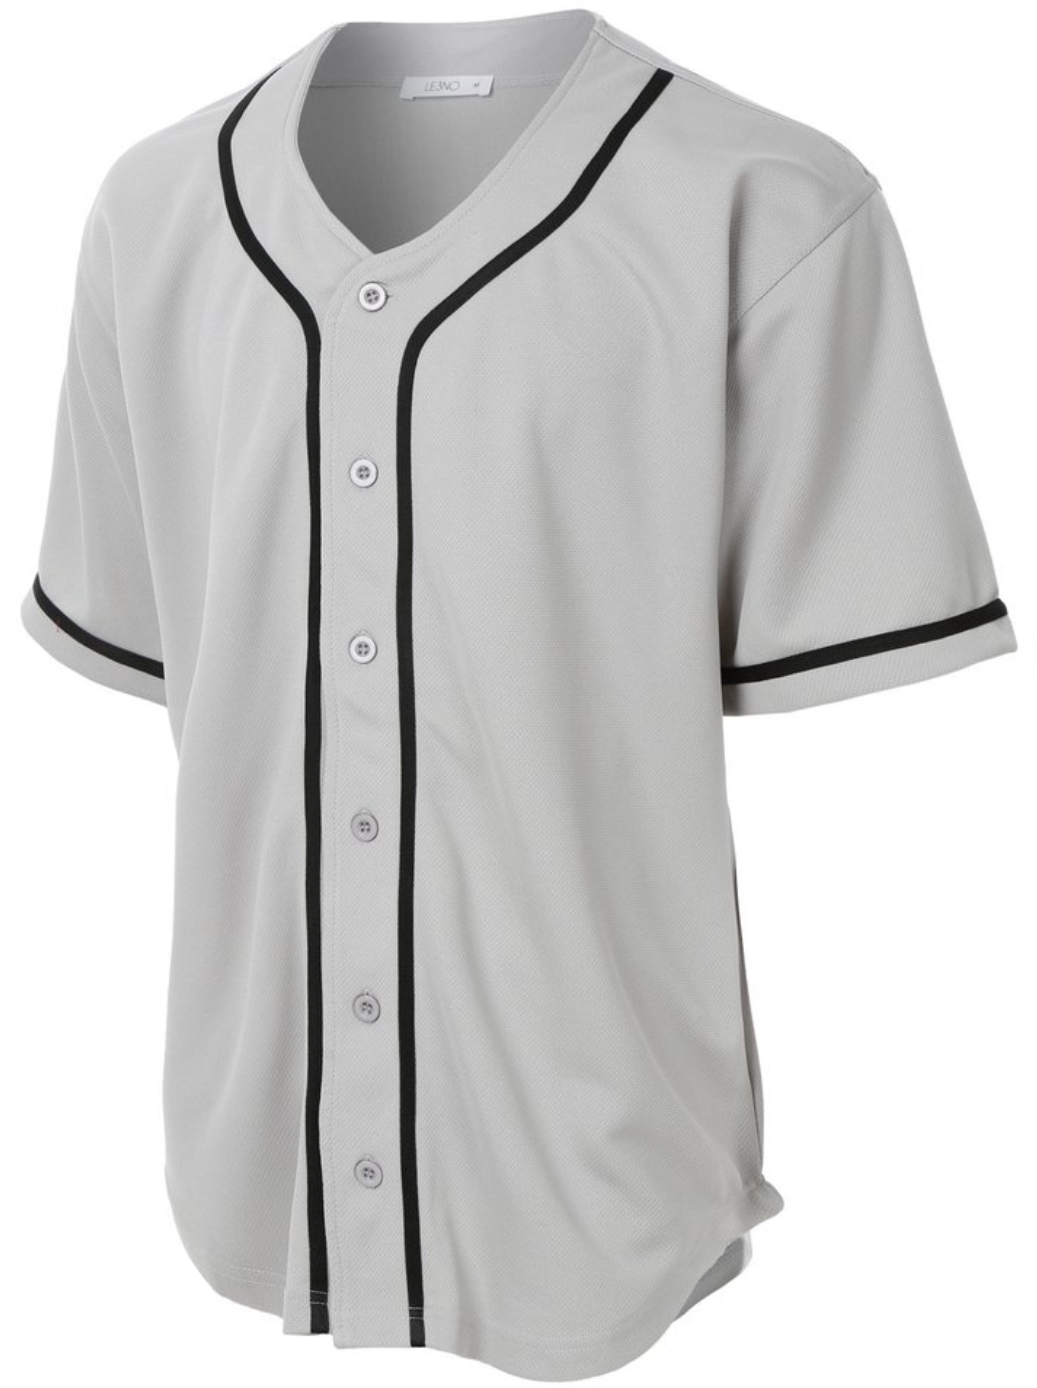 Blank Baseball Jersey Design